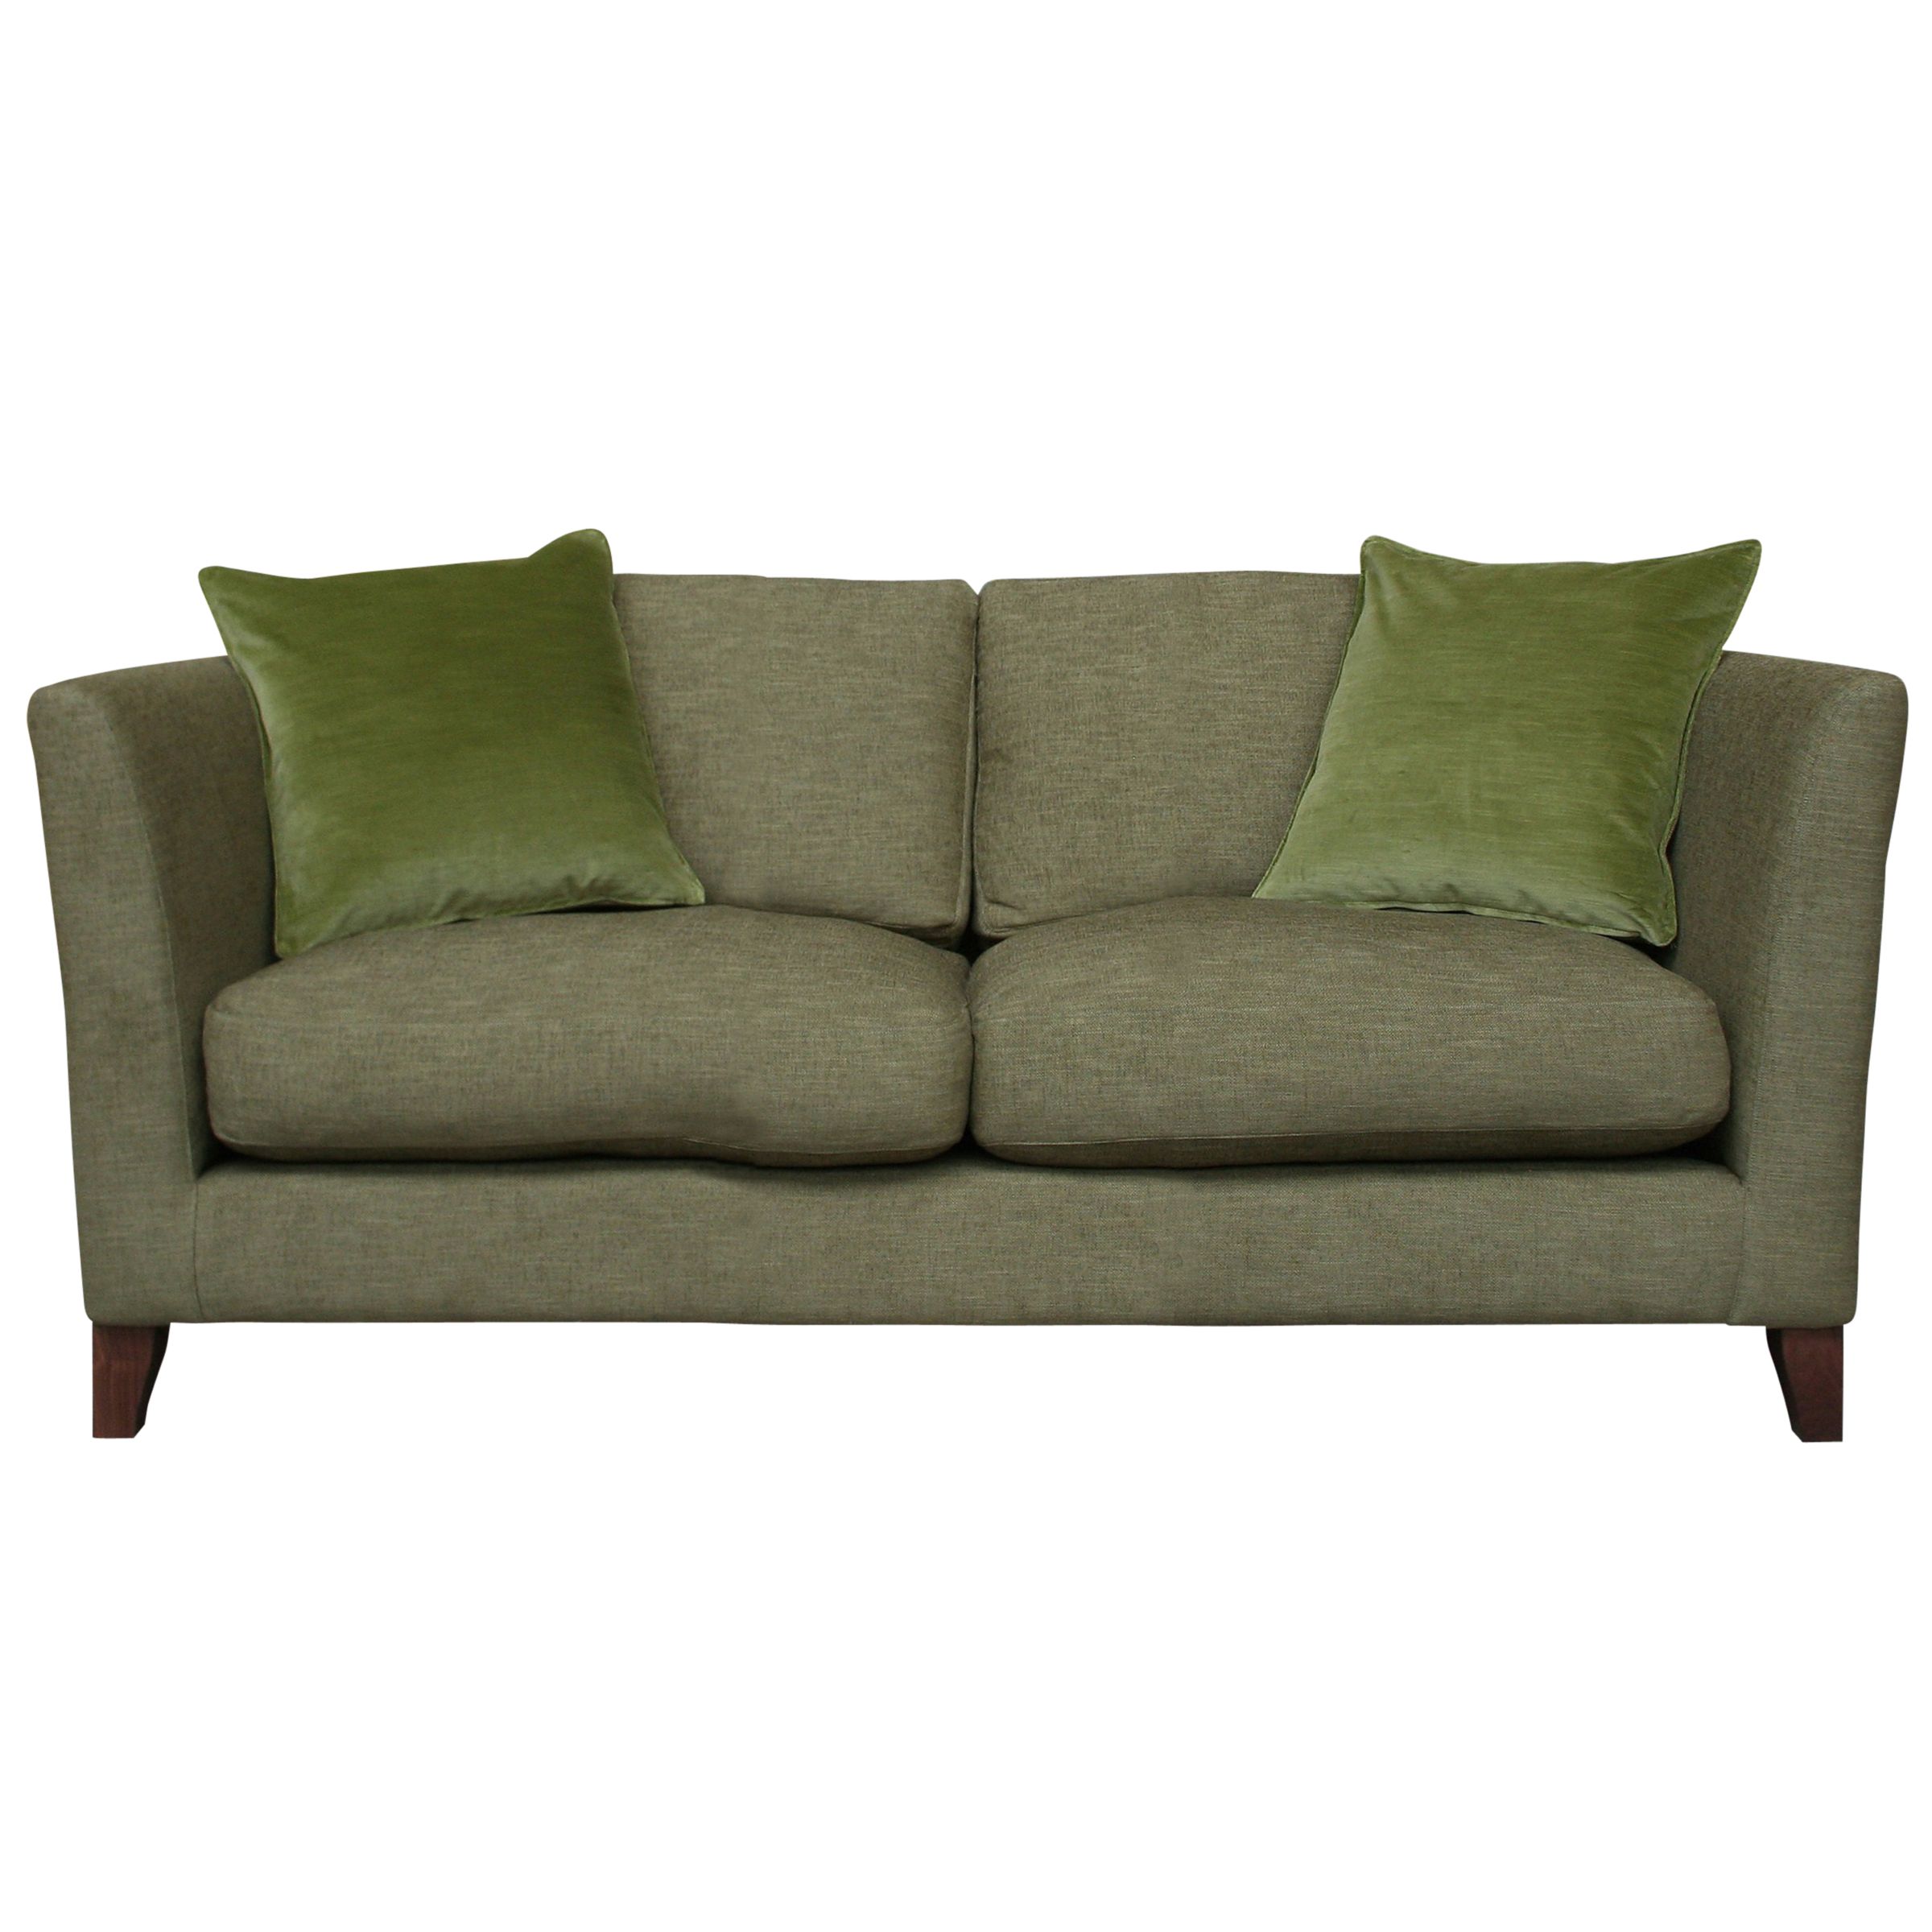 Nick Munro Collection Cushion Back Large Sofa,